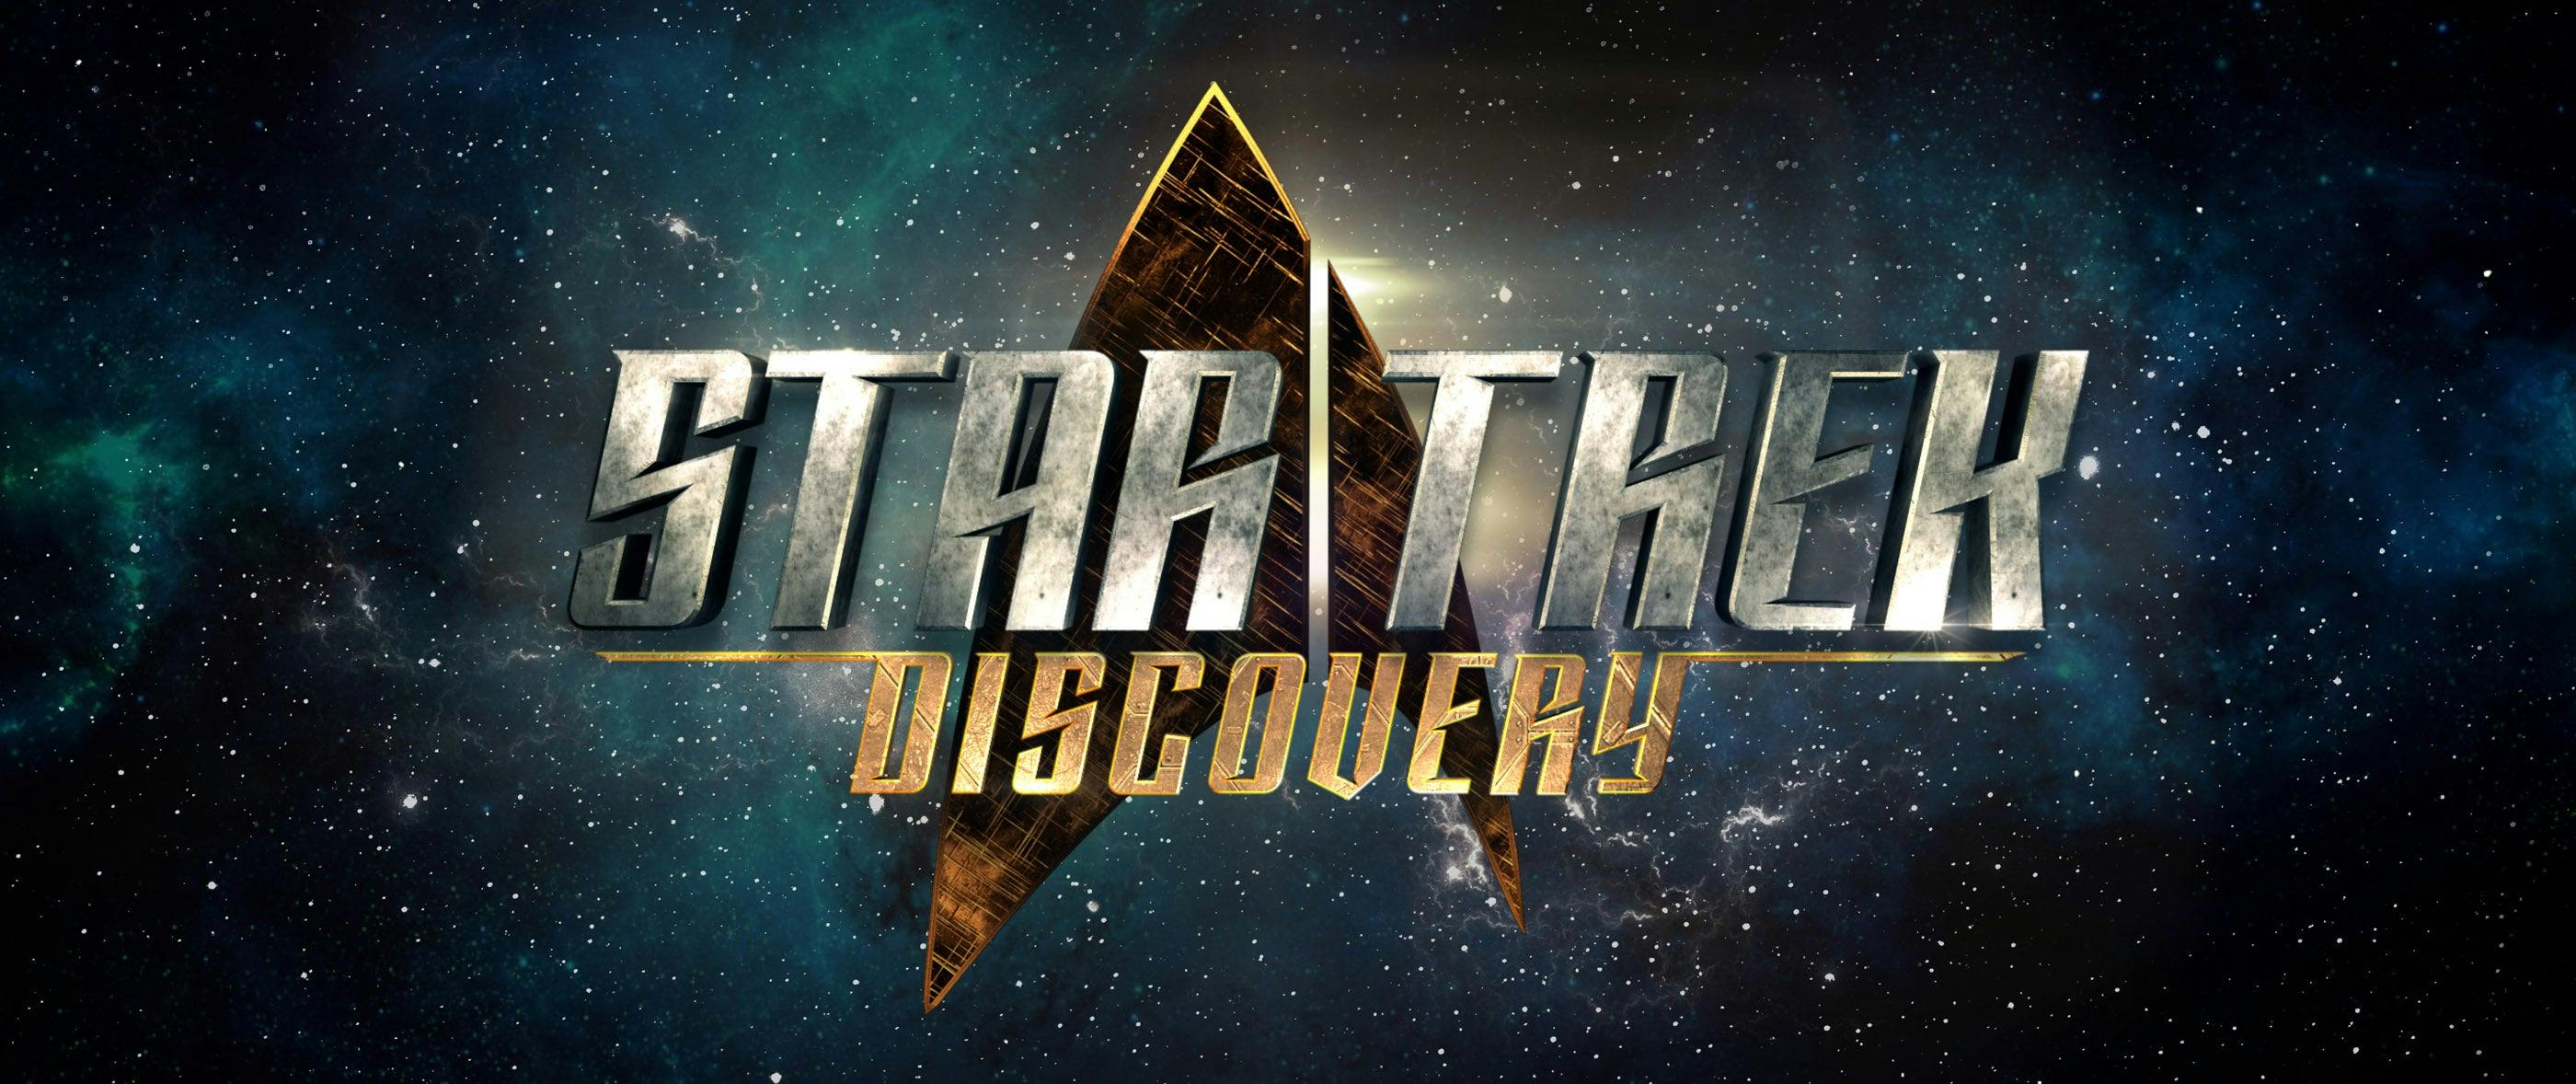 star trek ship discovery